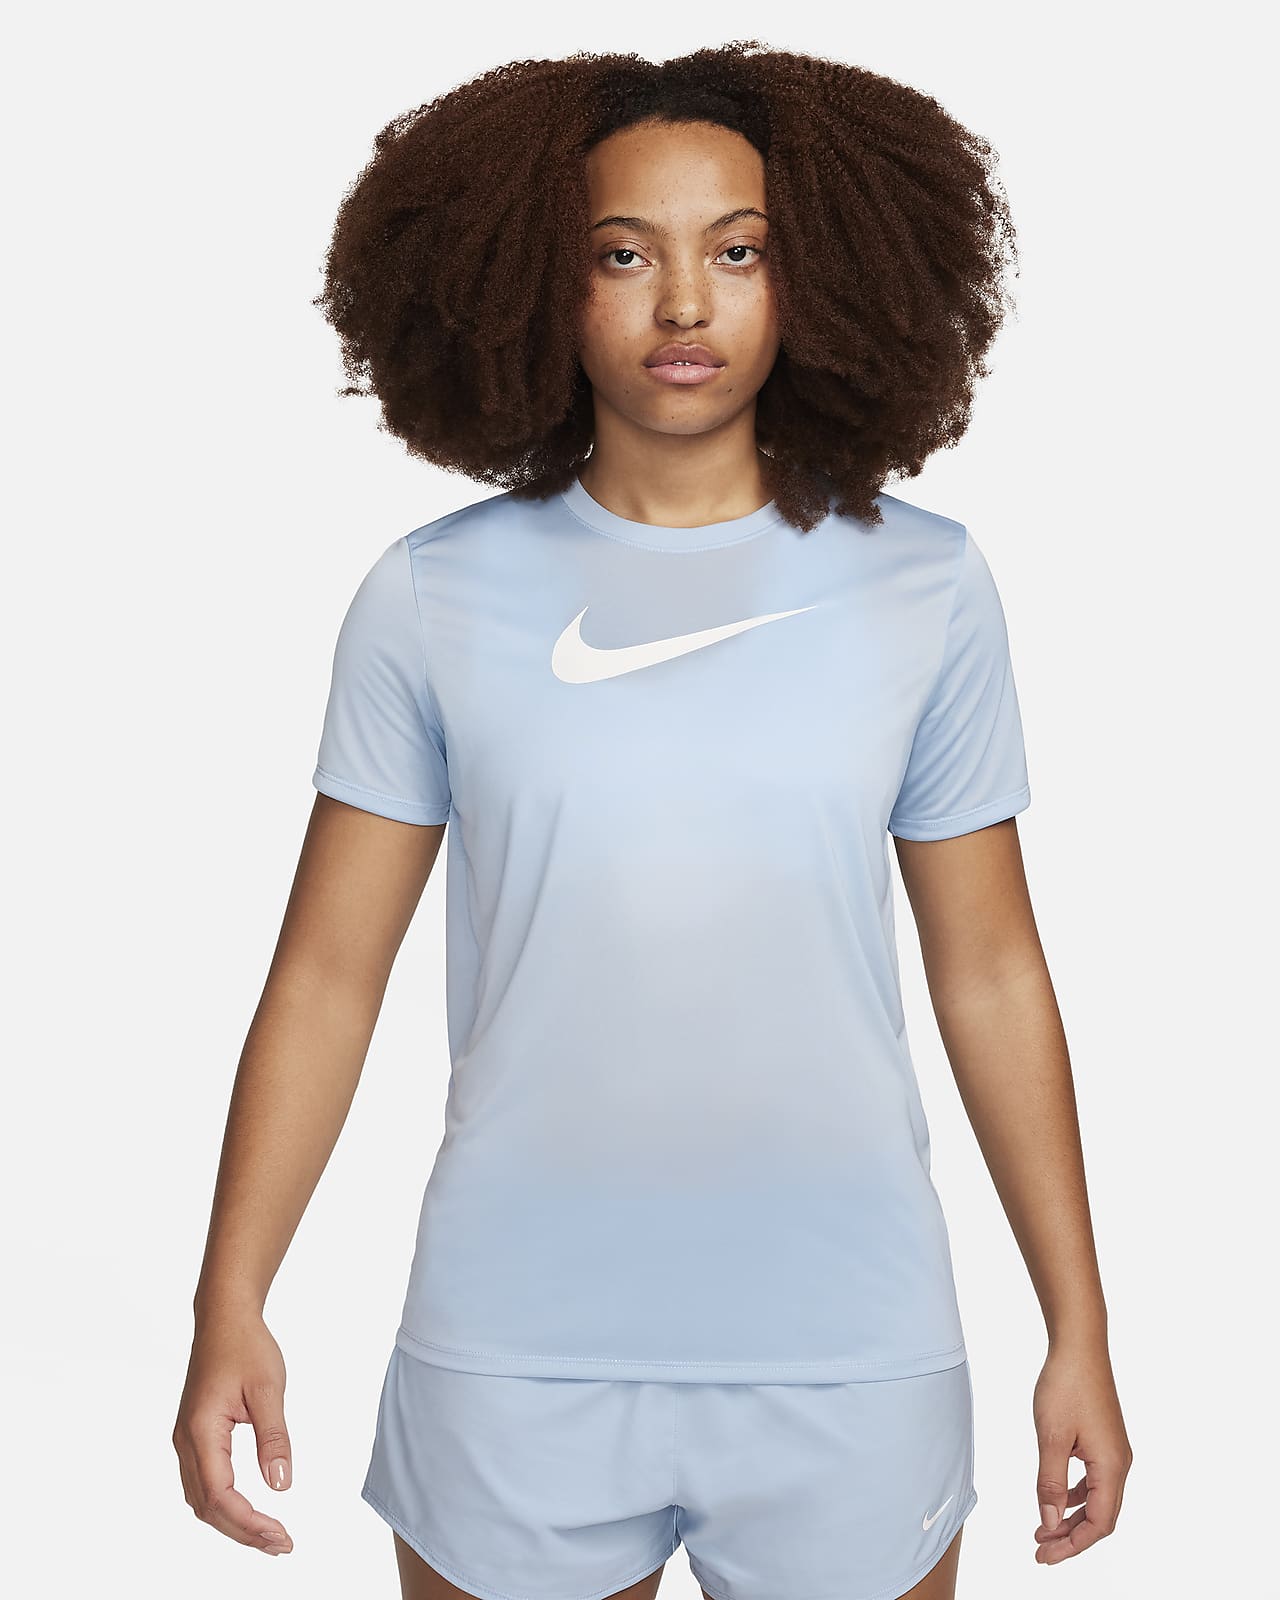 Nike Women's Dri-FIT Graphic T-Shirt